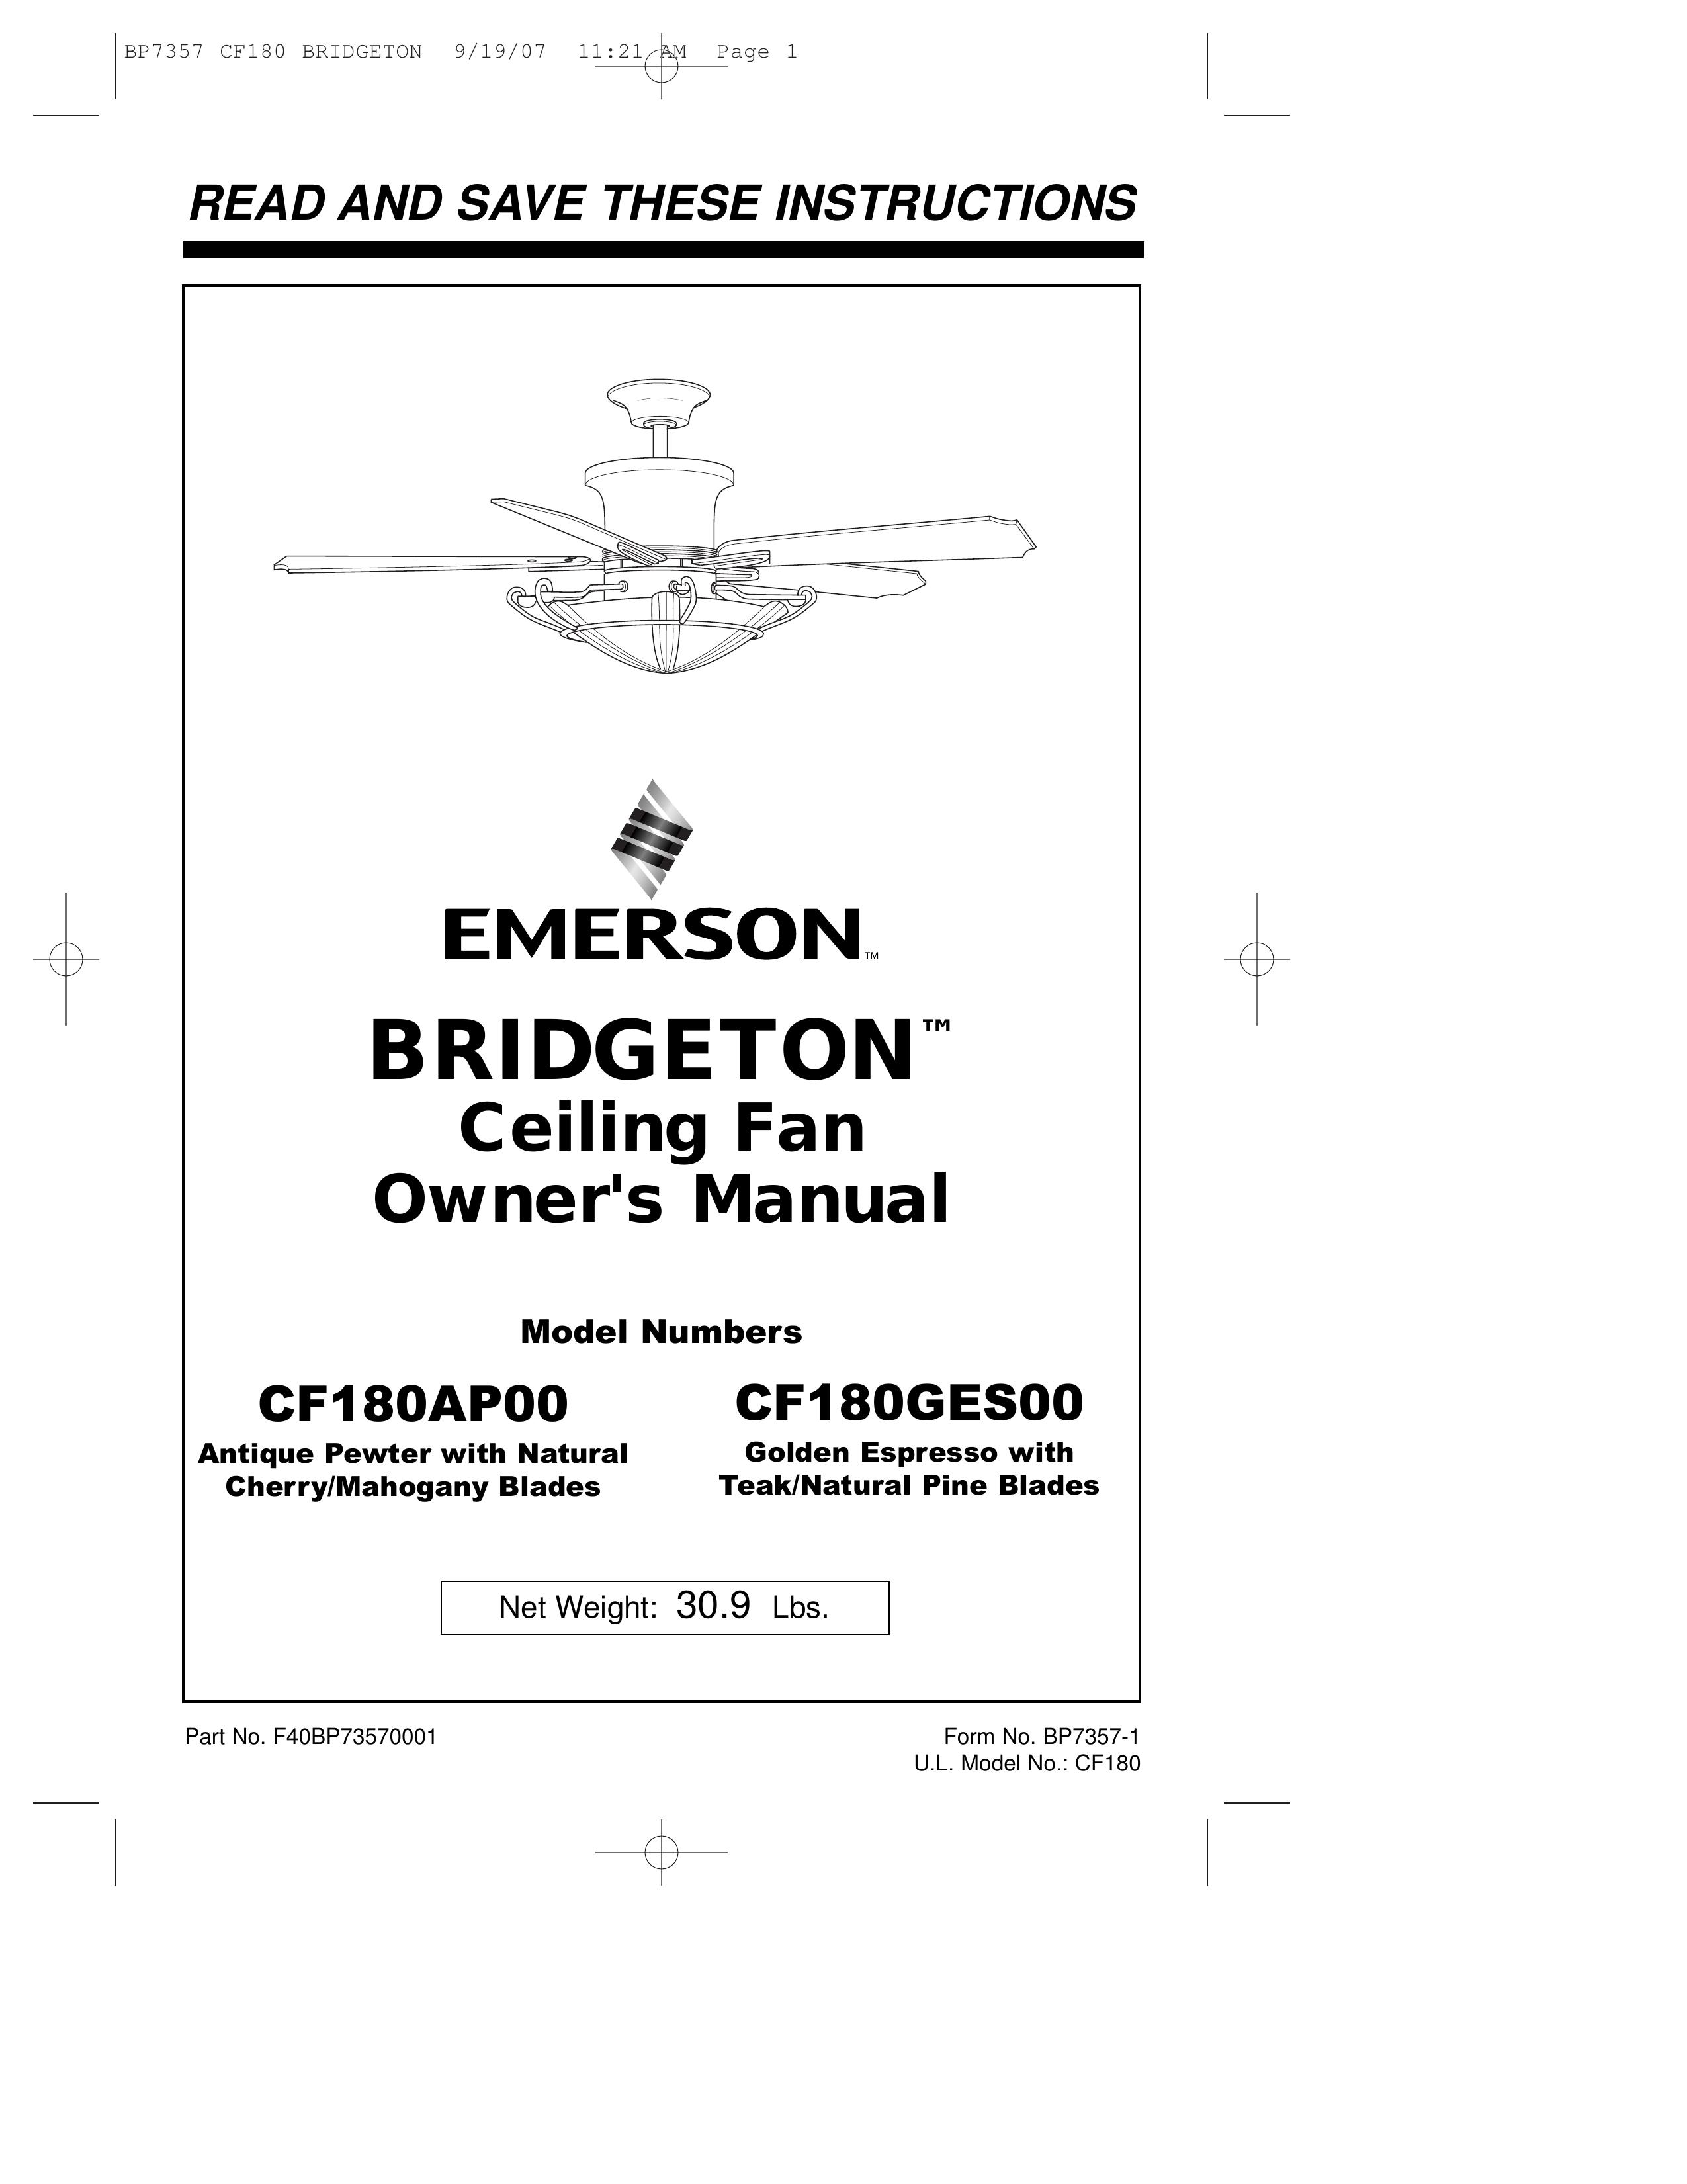 Emerson CF180AP00 Outdoor Ceiling Fan User Manual